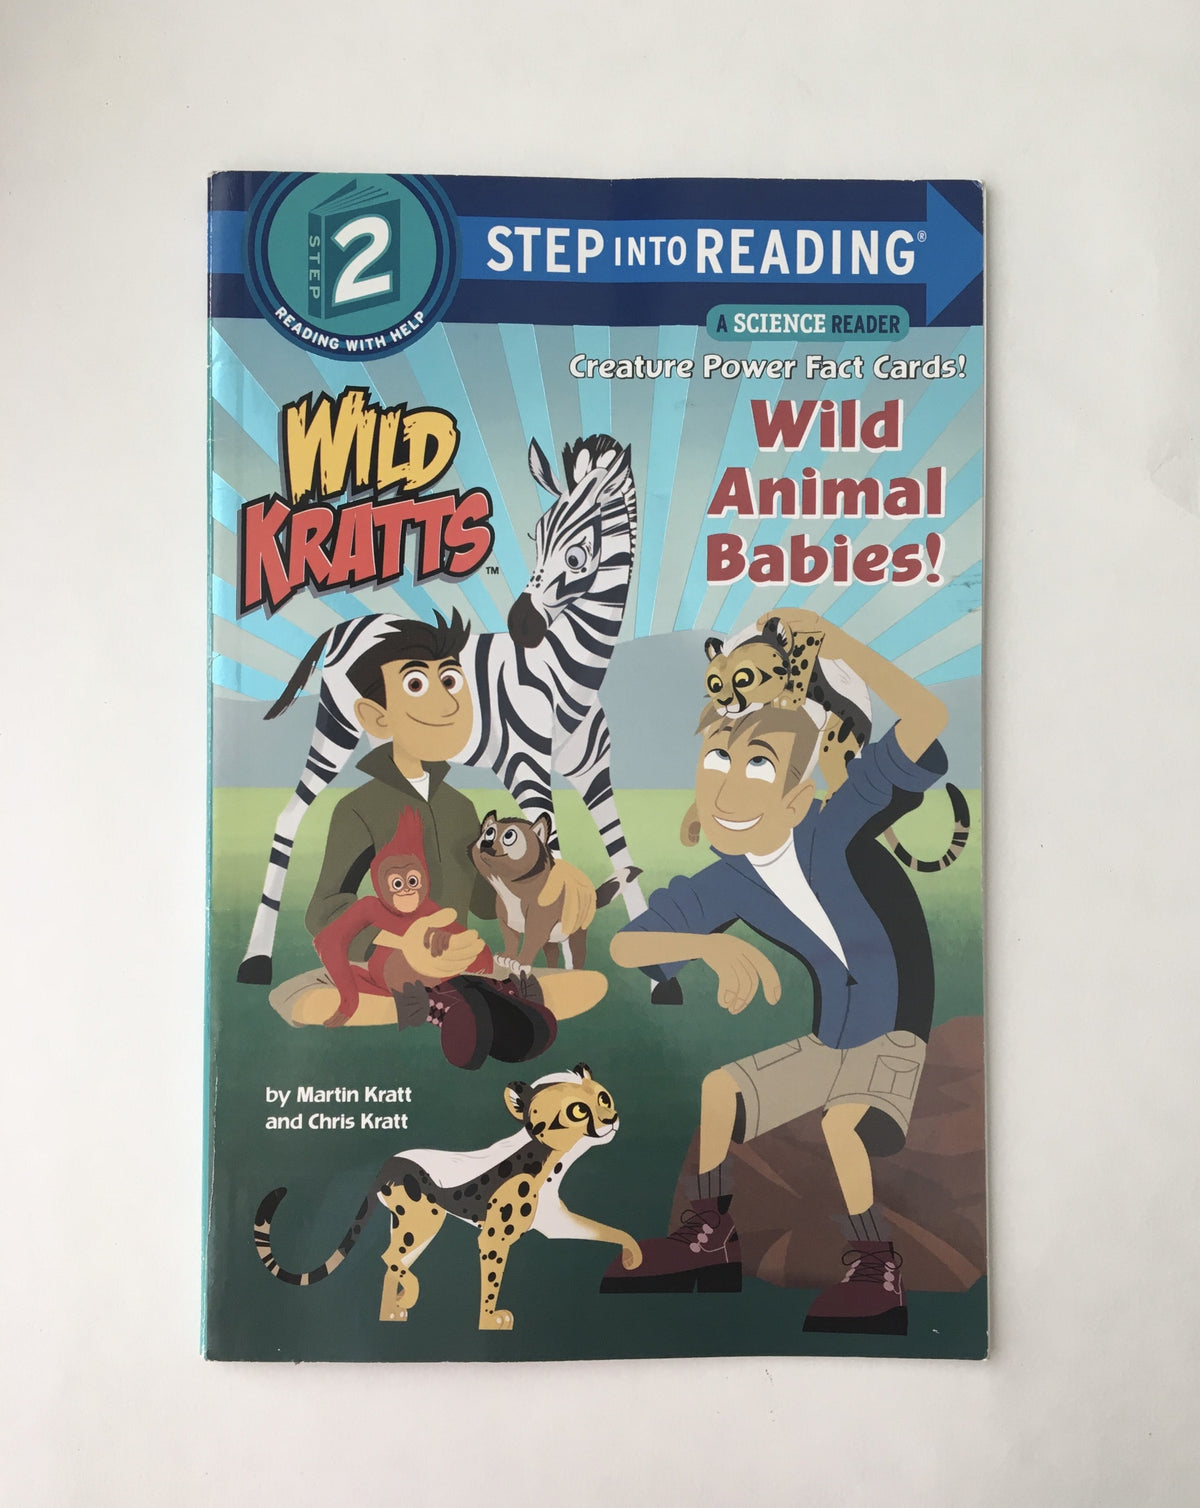 Wild Kratts: Wild Animal Babies by the Kratt Brothers